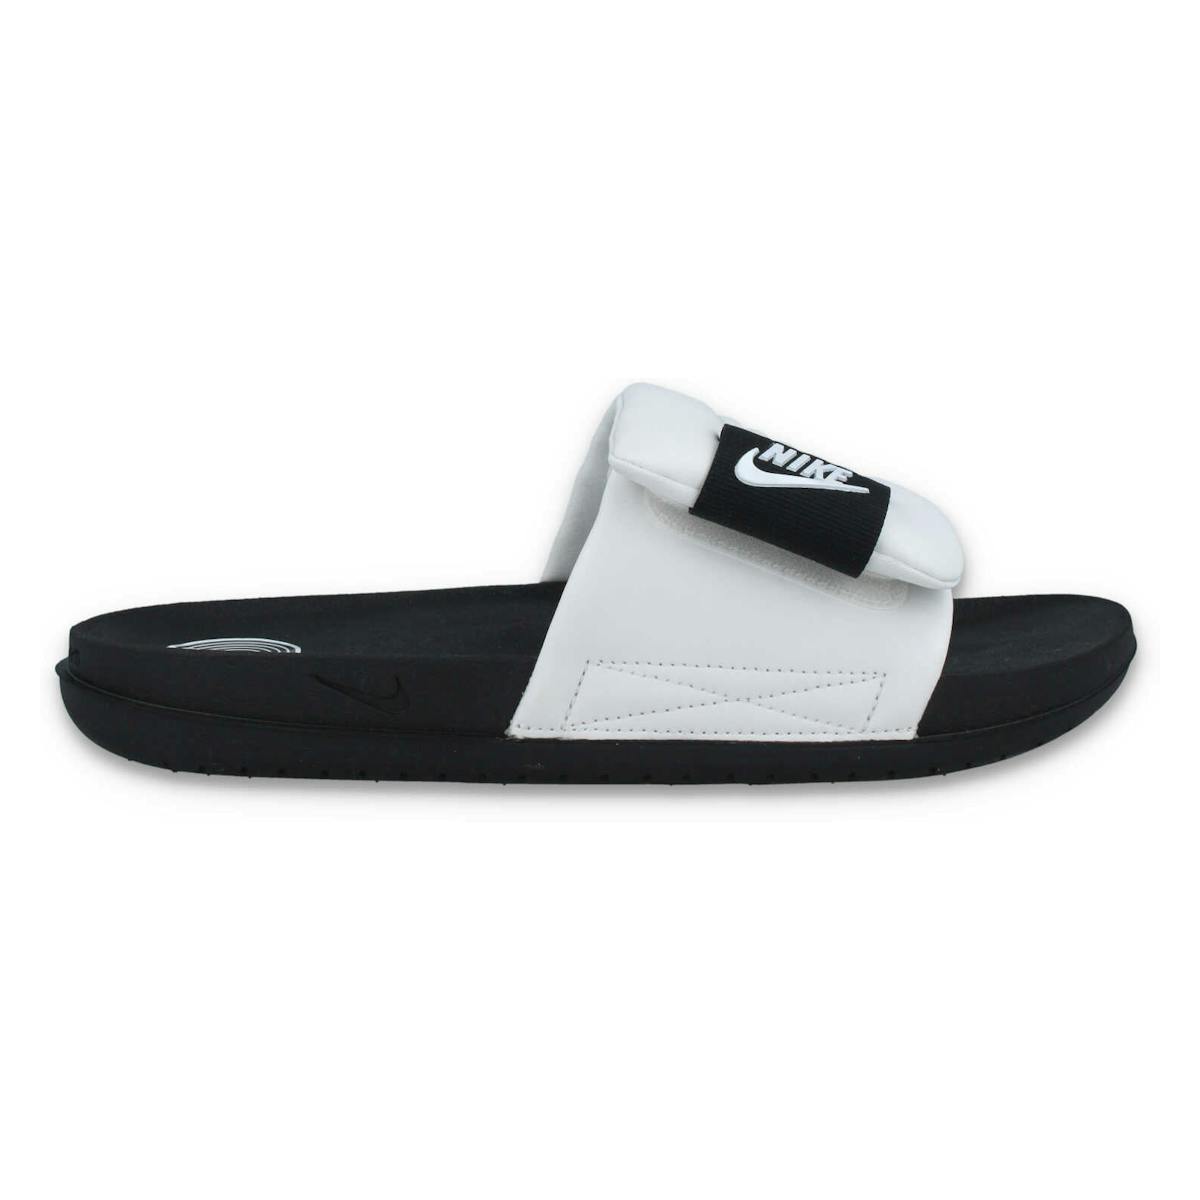 Nike Offcourt Adjust Slippers